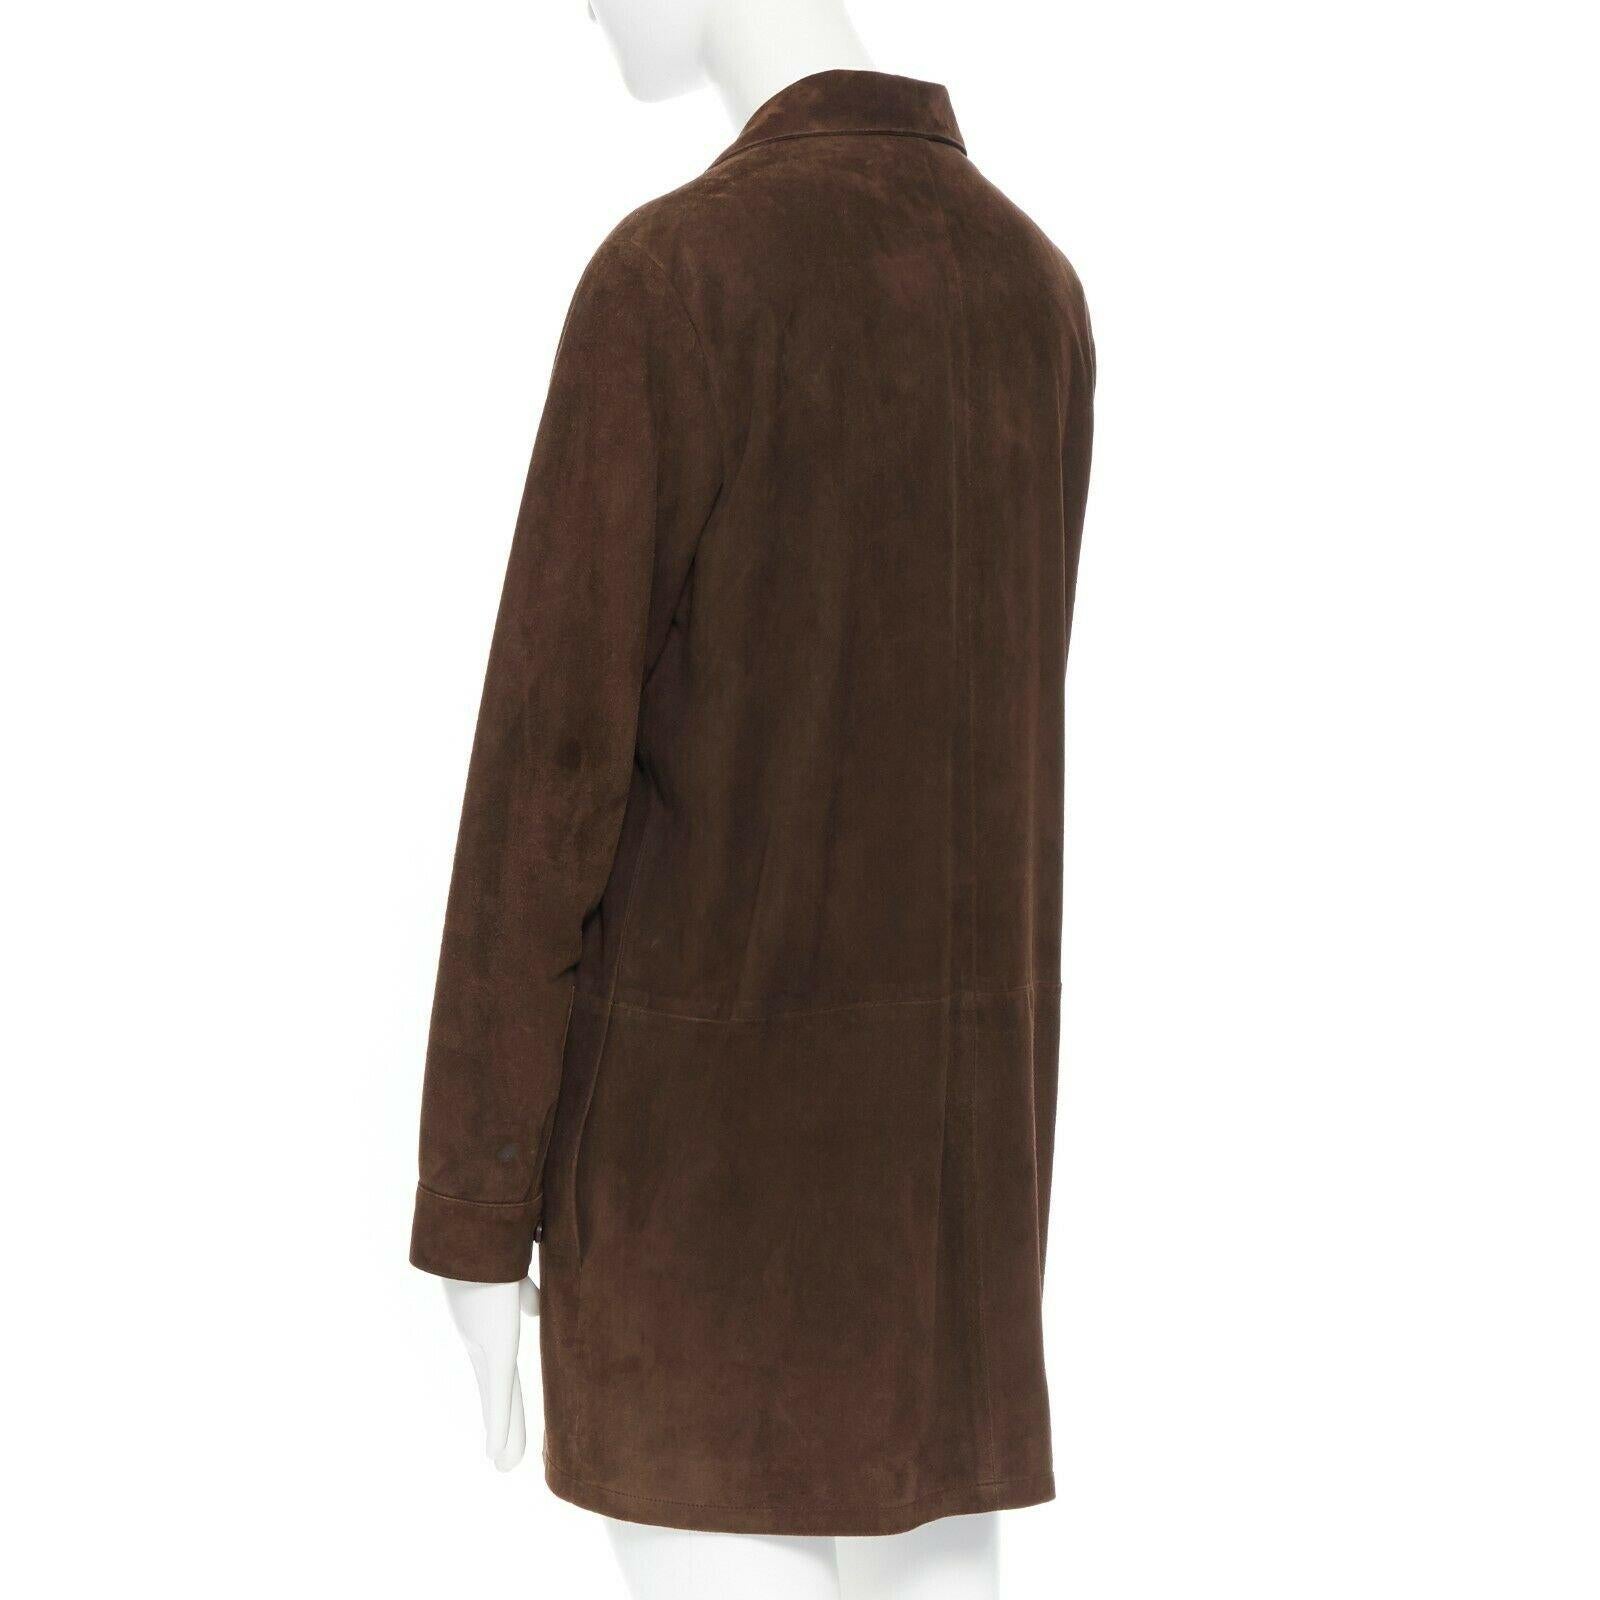 HERMES MARTIN MARGIELA vintage brown suede peak spread collar long shirt FR38 3